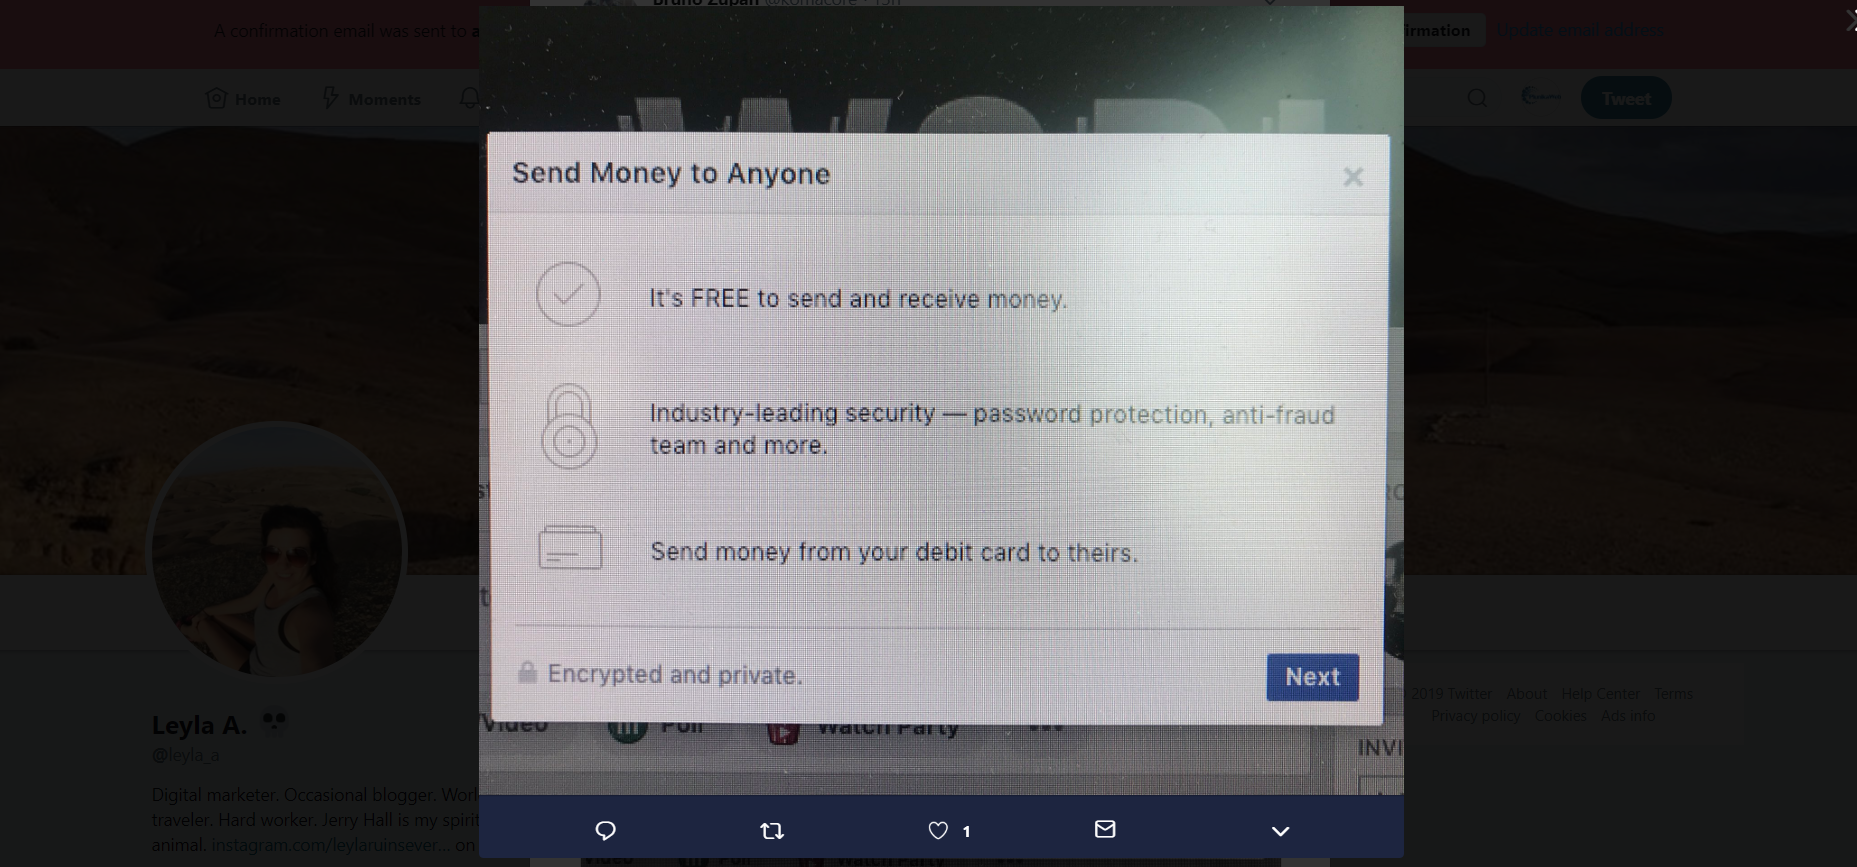 BREAKING: Facebook testing ability to send/receive money through website